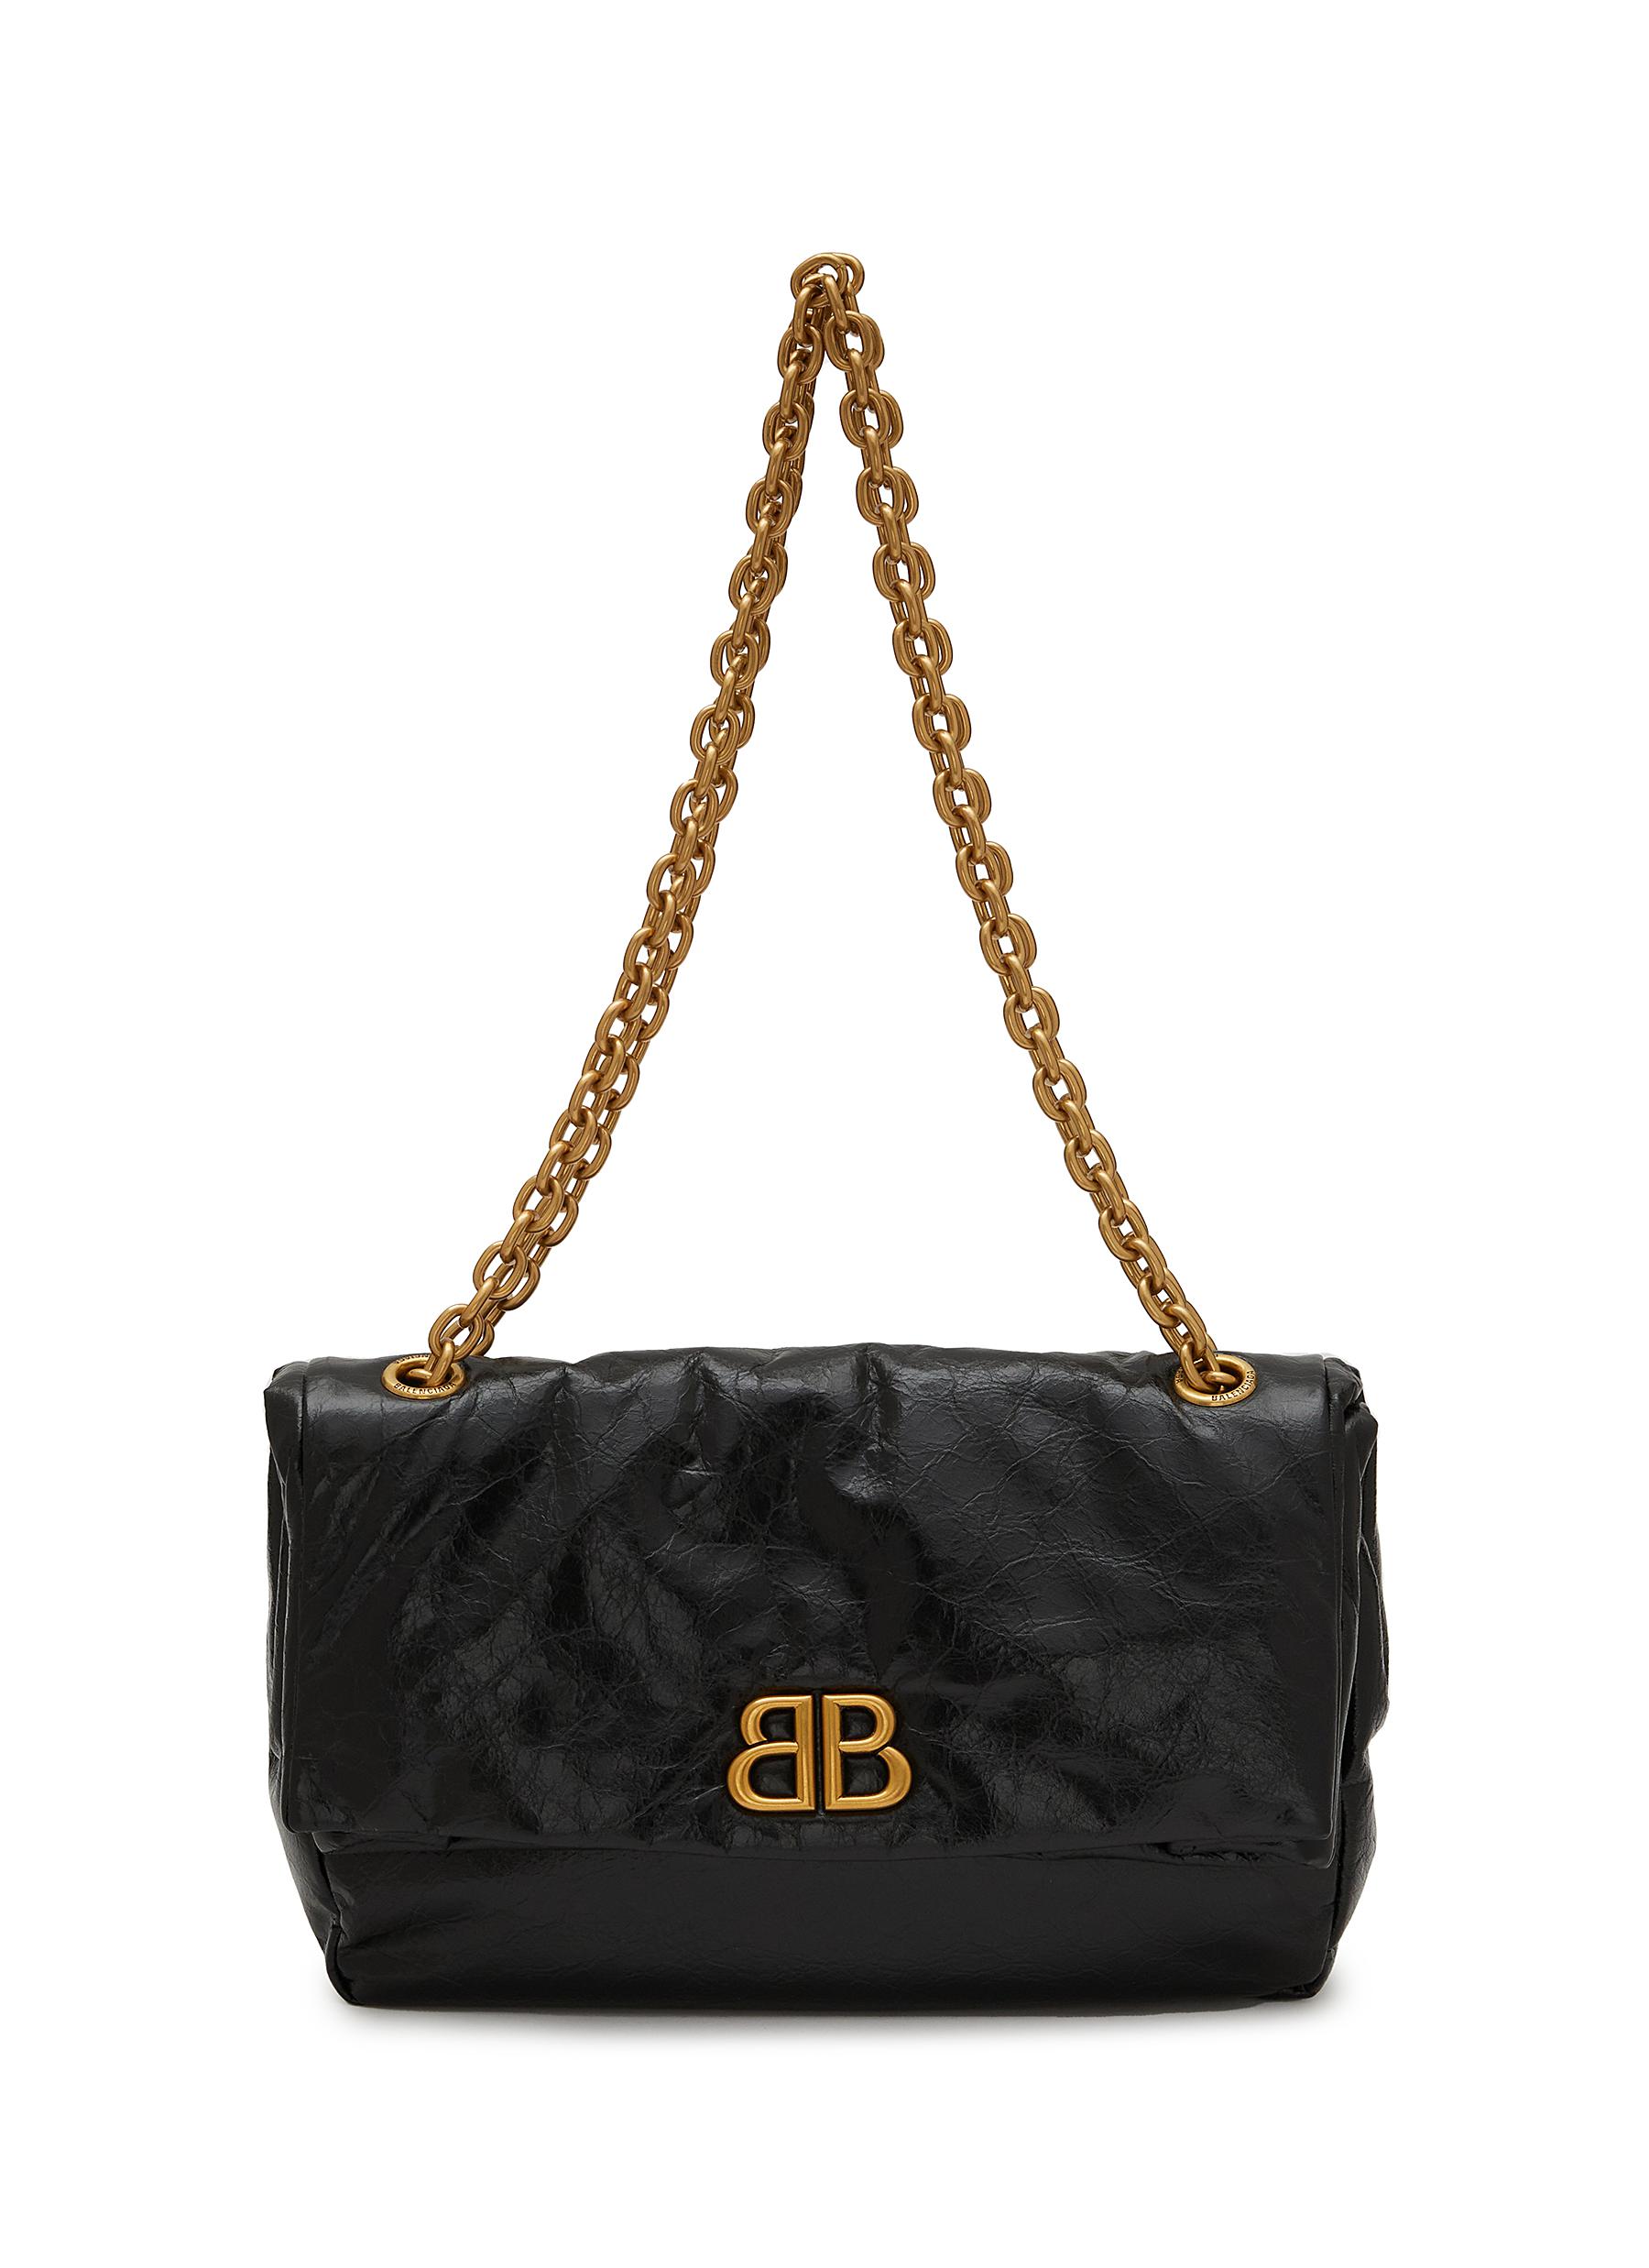 Balenciaga: Beige XS Hourglass Top Handle Bag | SSENSE Canada